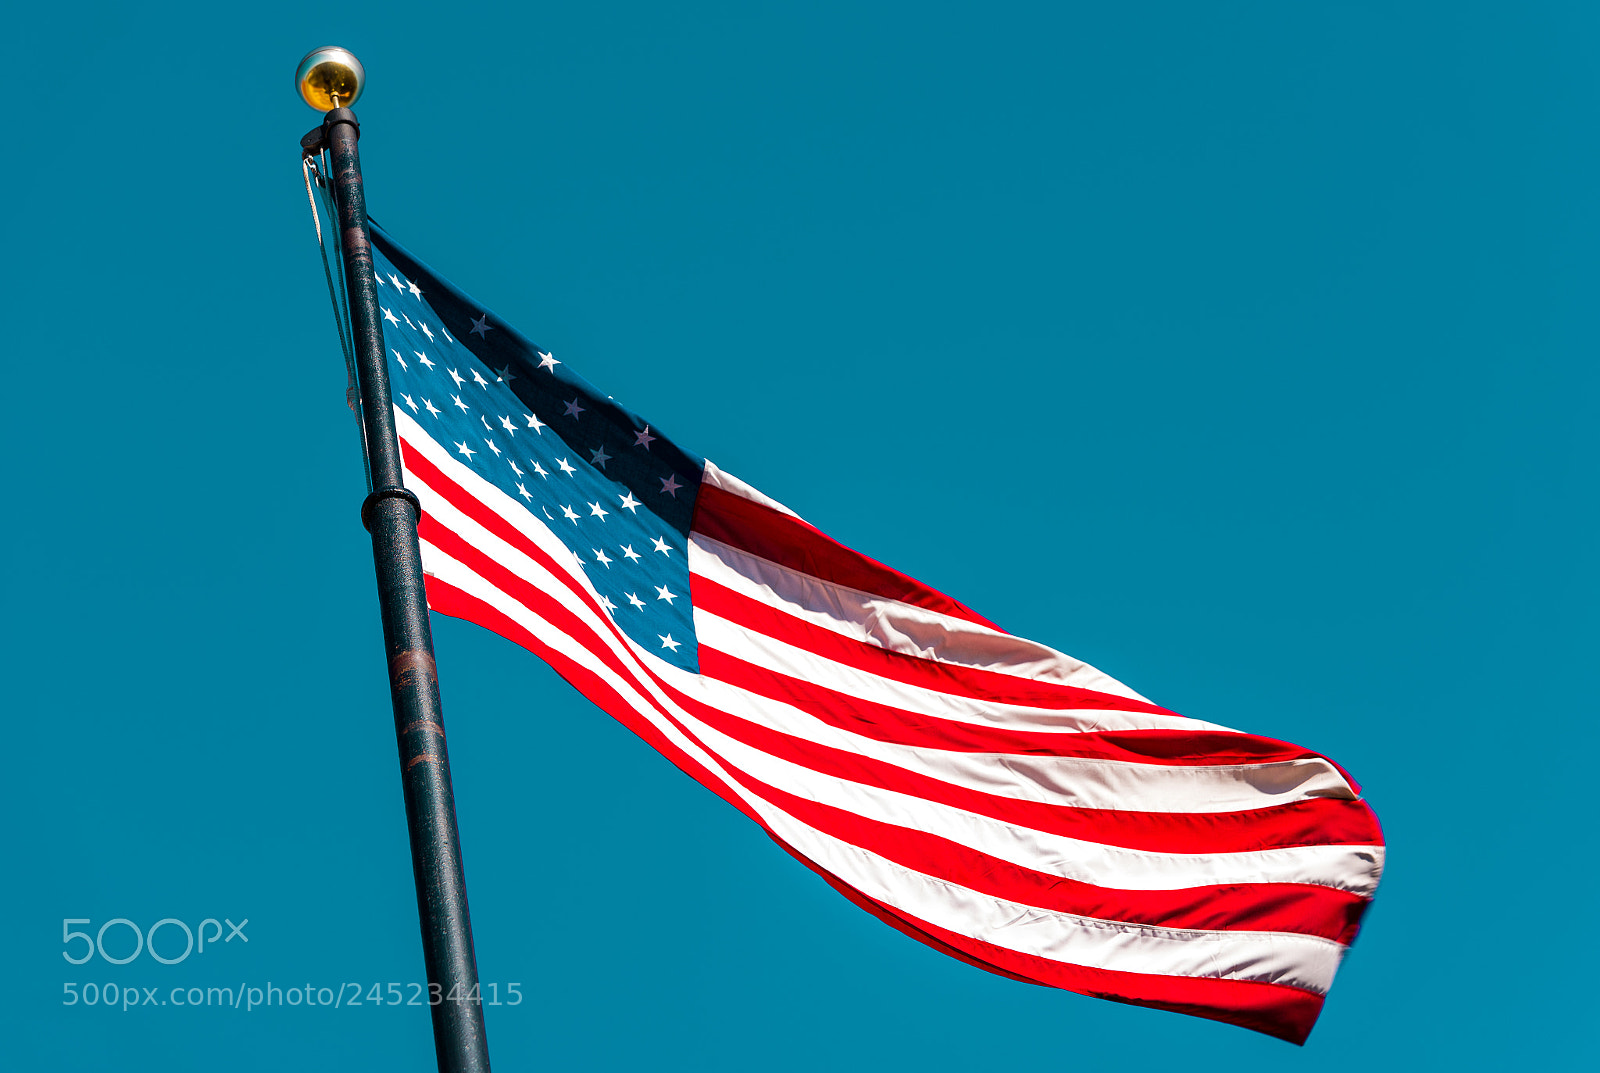 Nikon D750 sample photo. American flag waving on photography